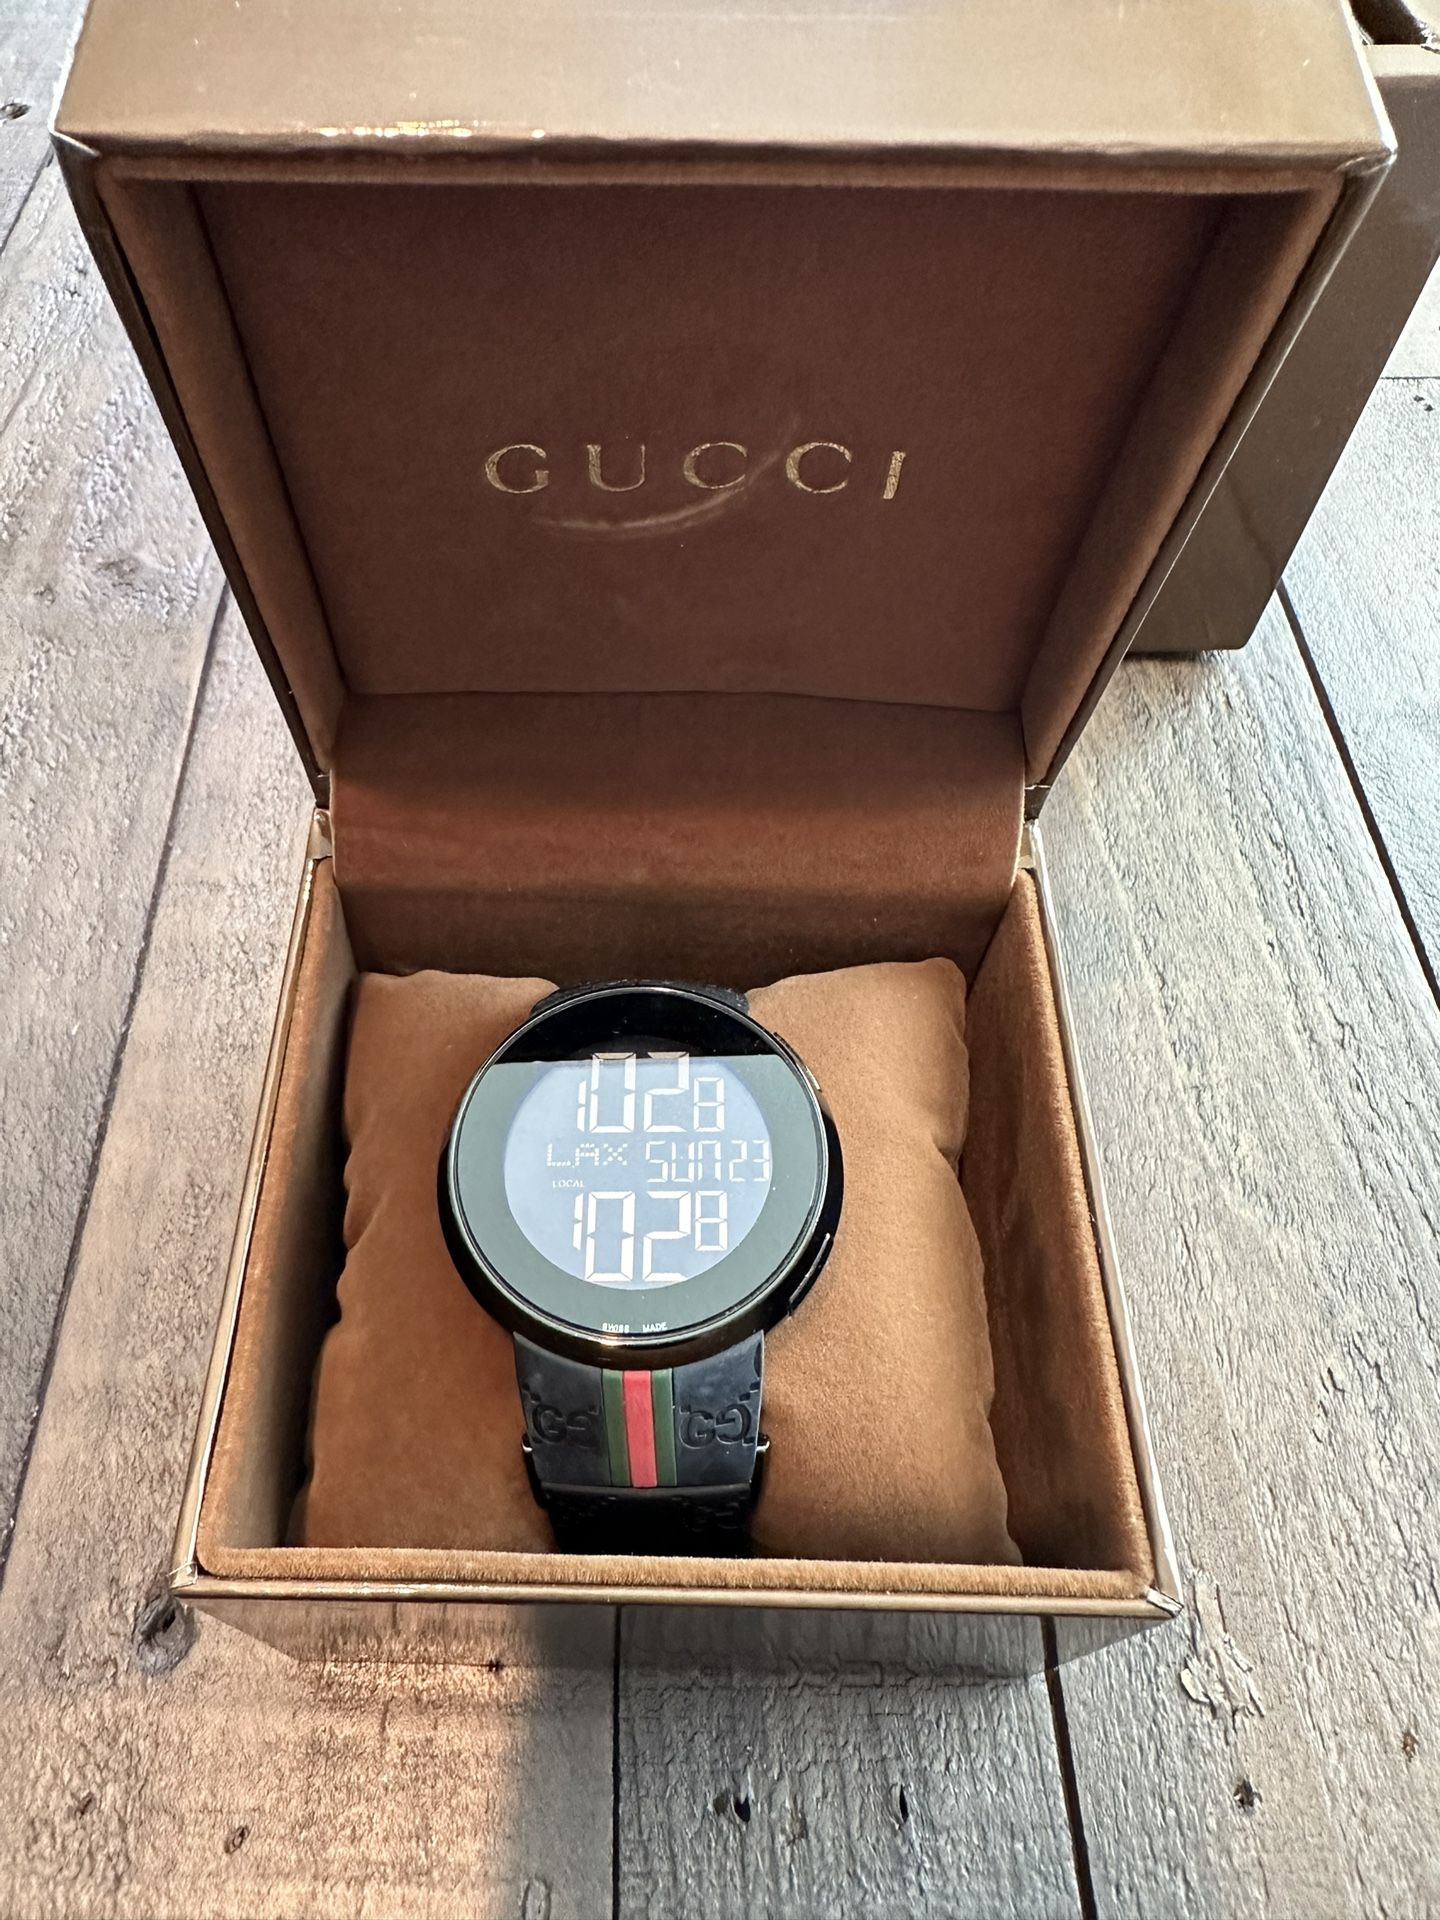 Gucci I- 114 Men's Digital Watch